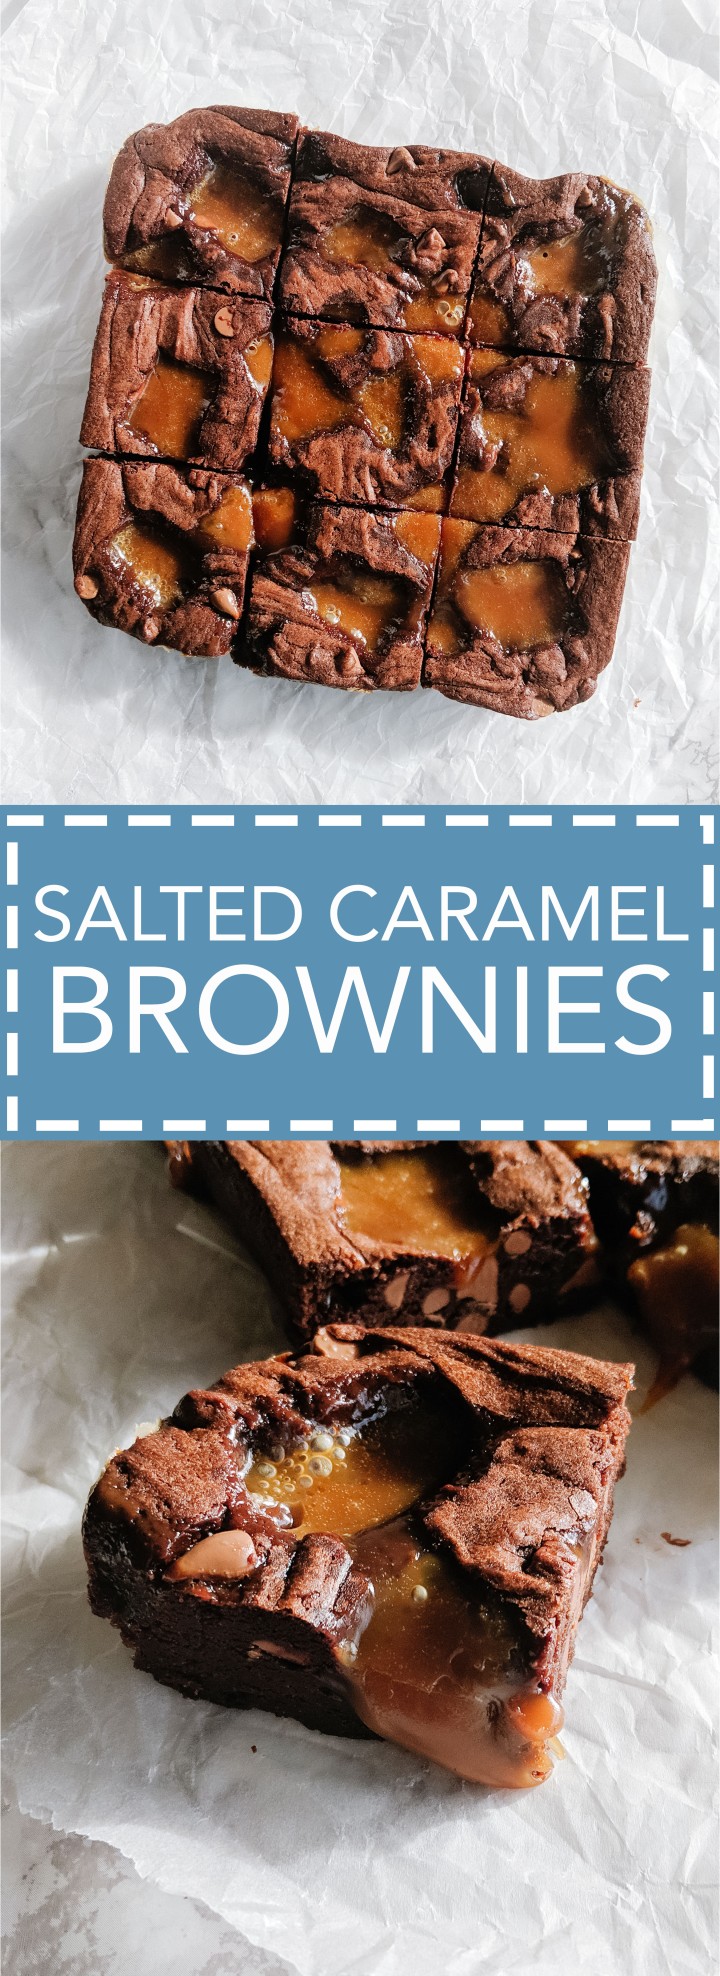 Salted Caramel Brownies - Yum!